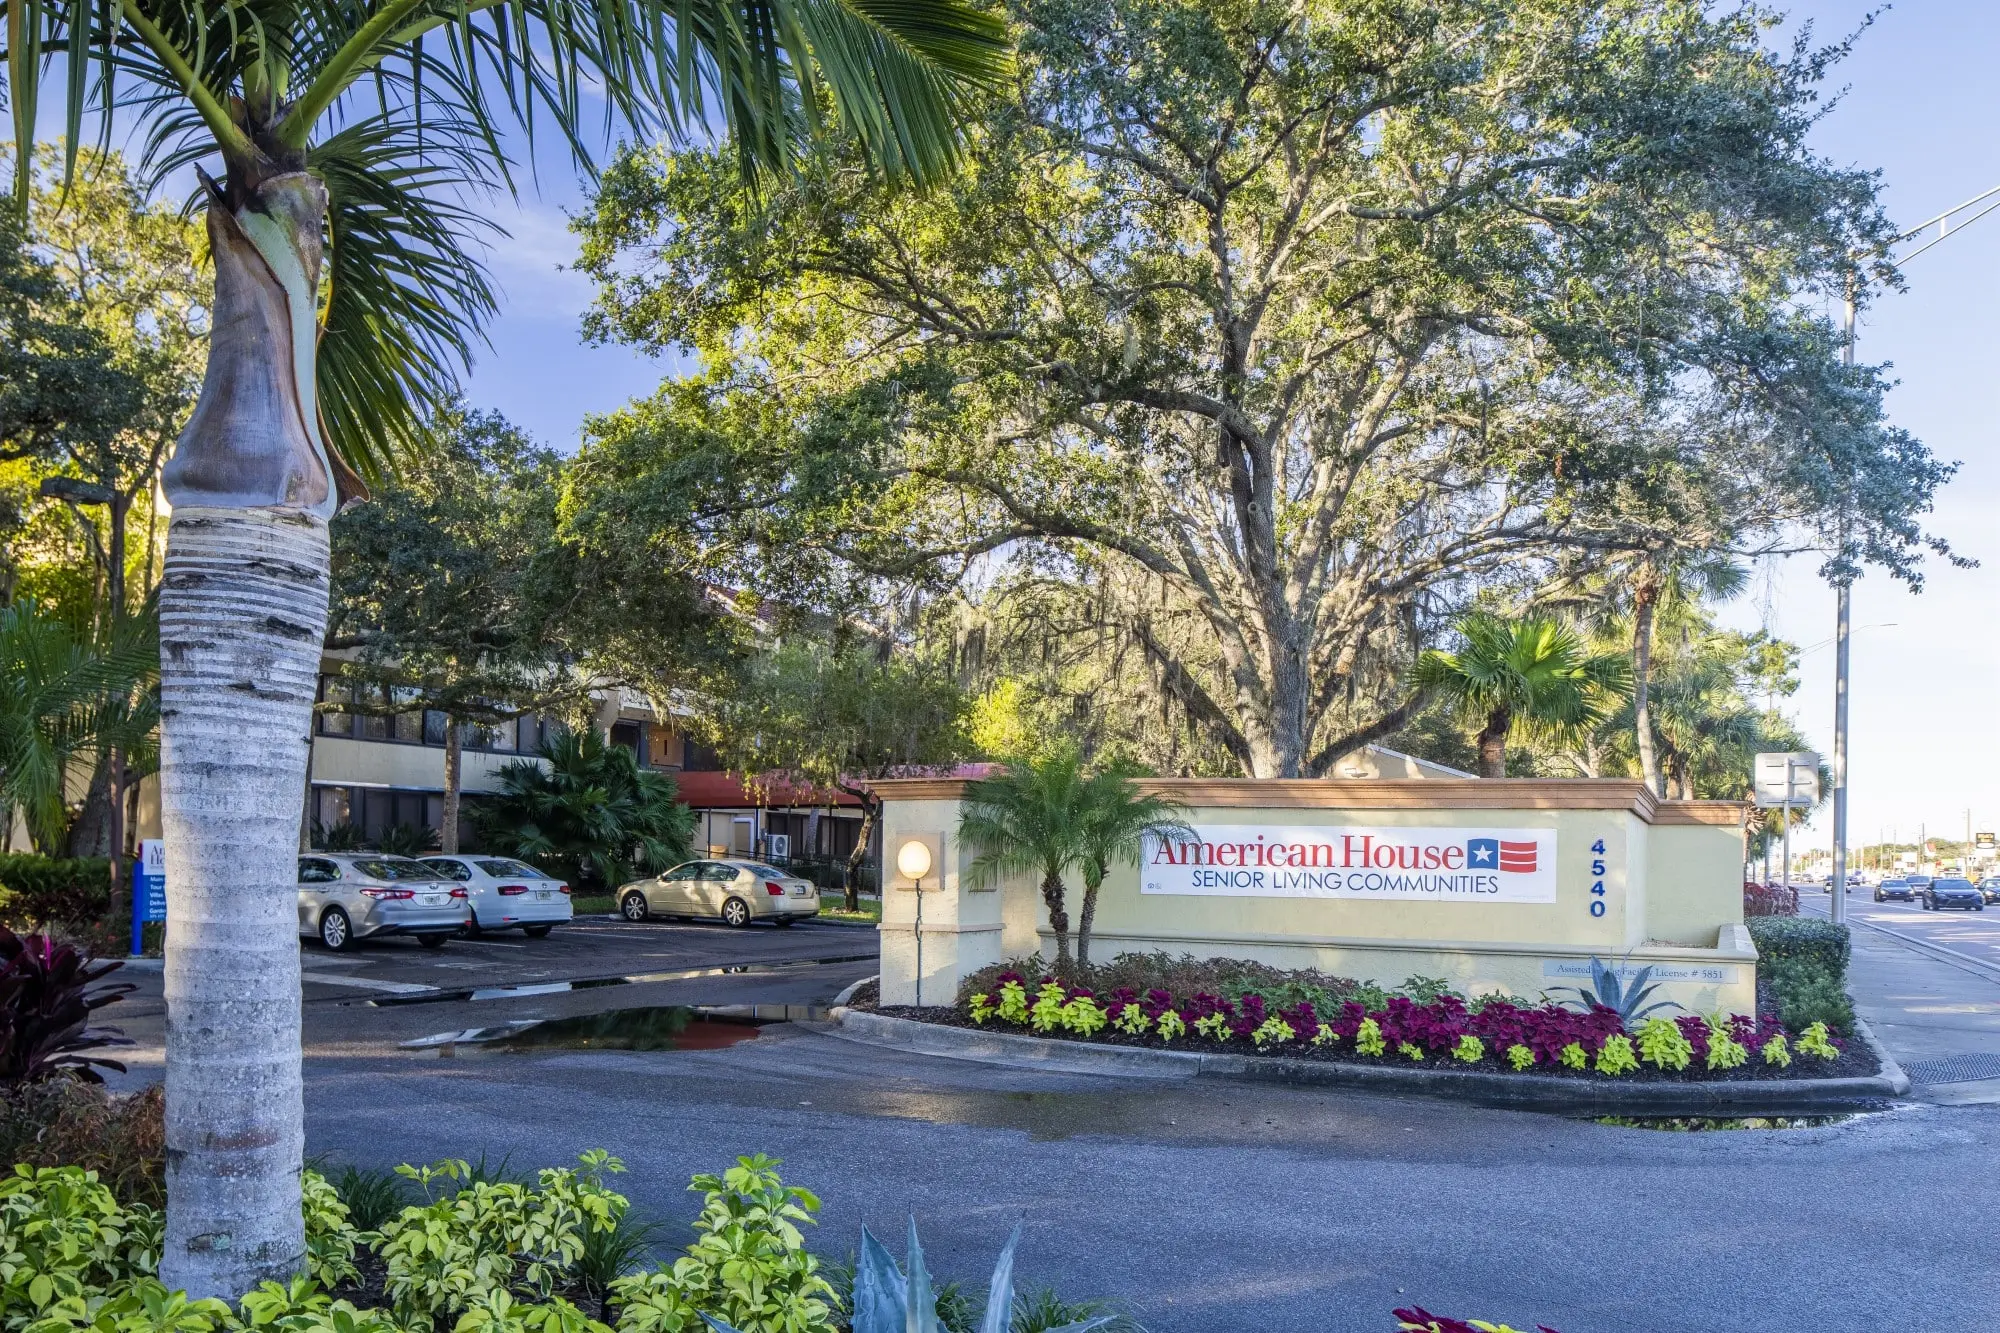 Exterior and sign of American House Sarasota, a retirement home in Sarasota, Florida